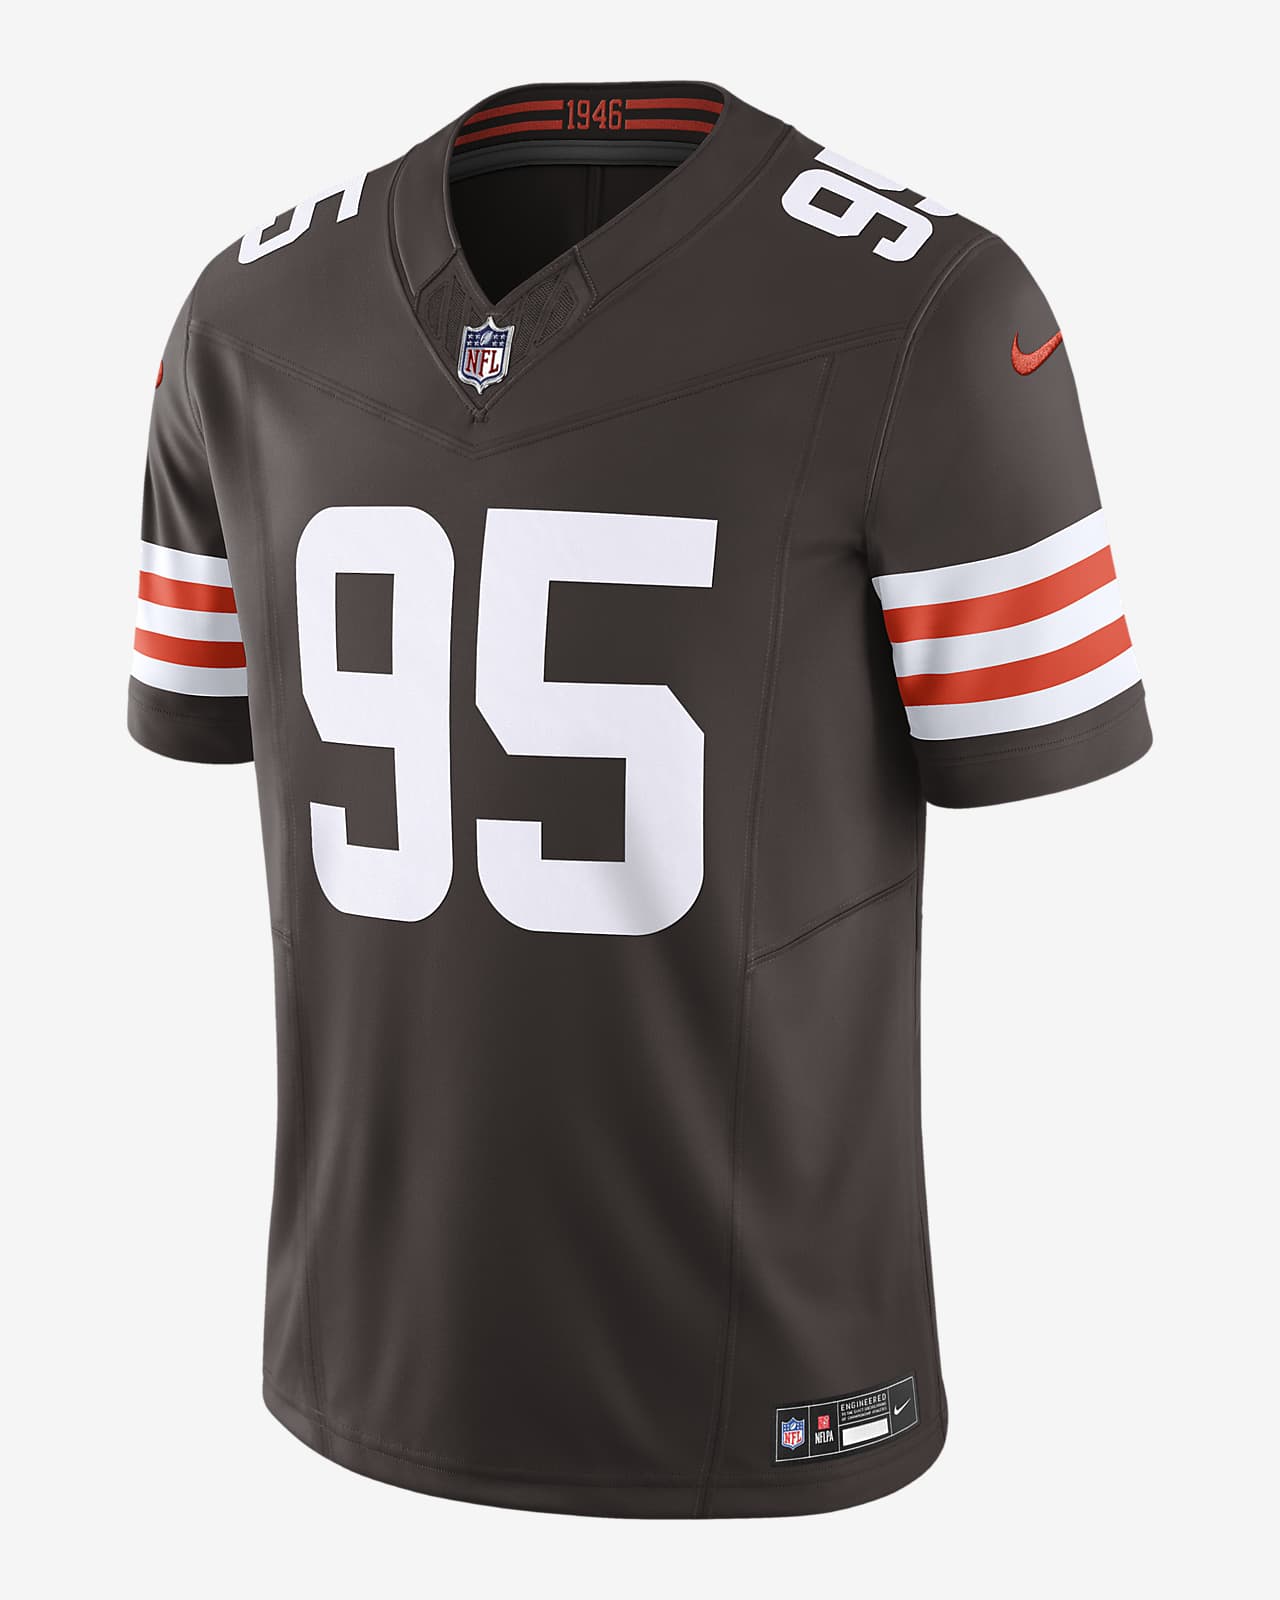 Jersey de fútbol americano Nike Dri-FIT de la NFL Limited para hombre Myles Garrett Cleveland Browns